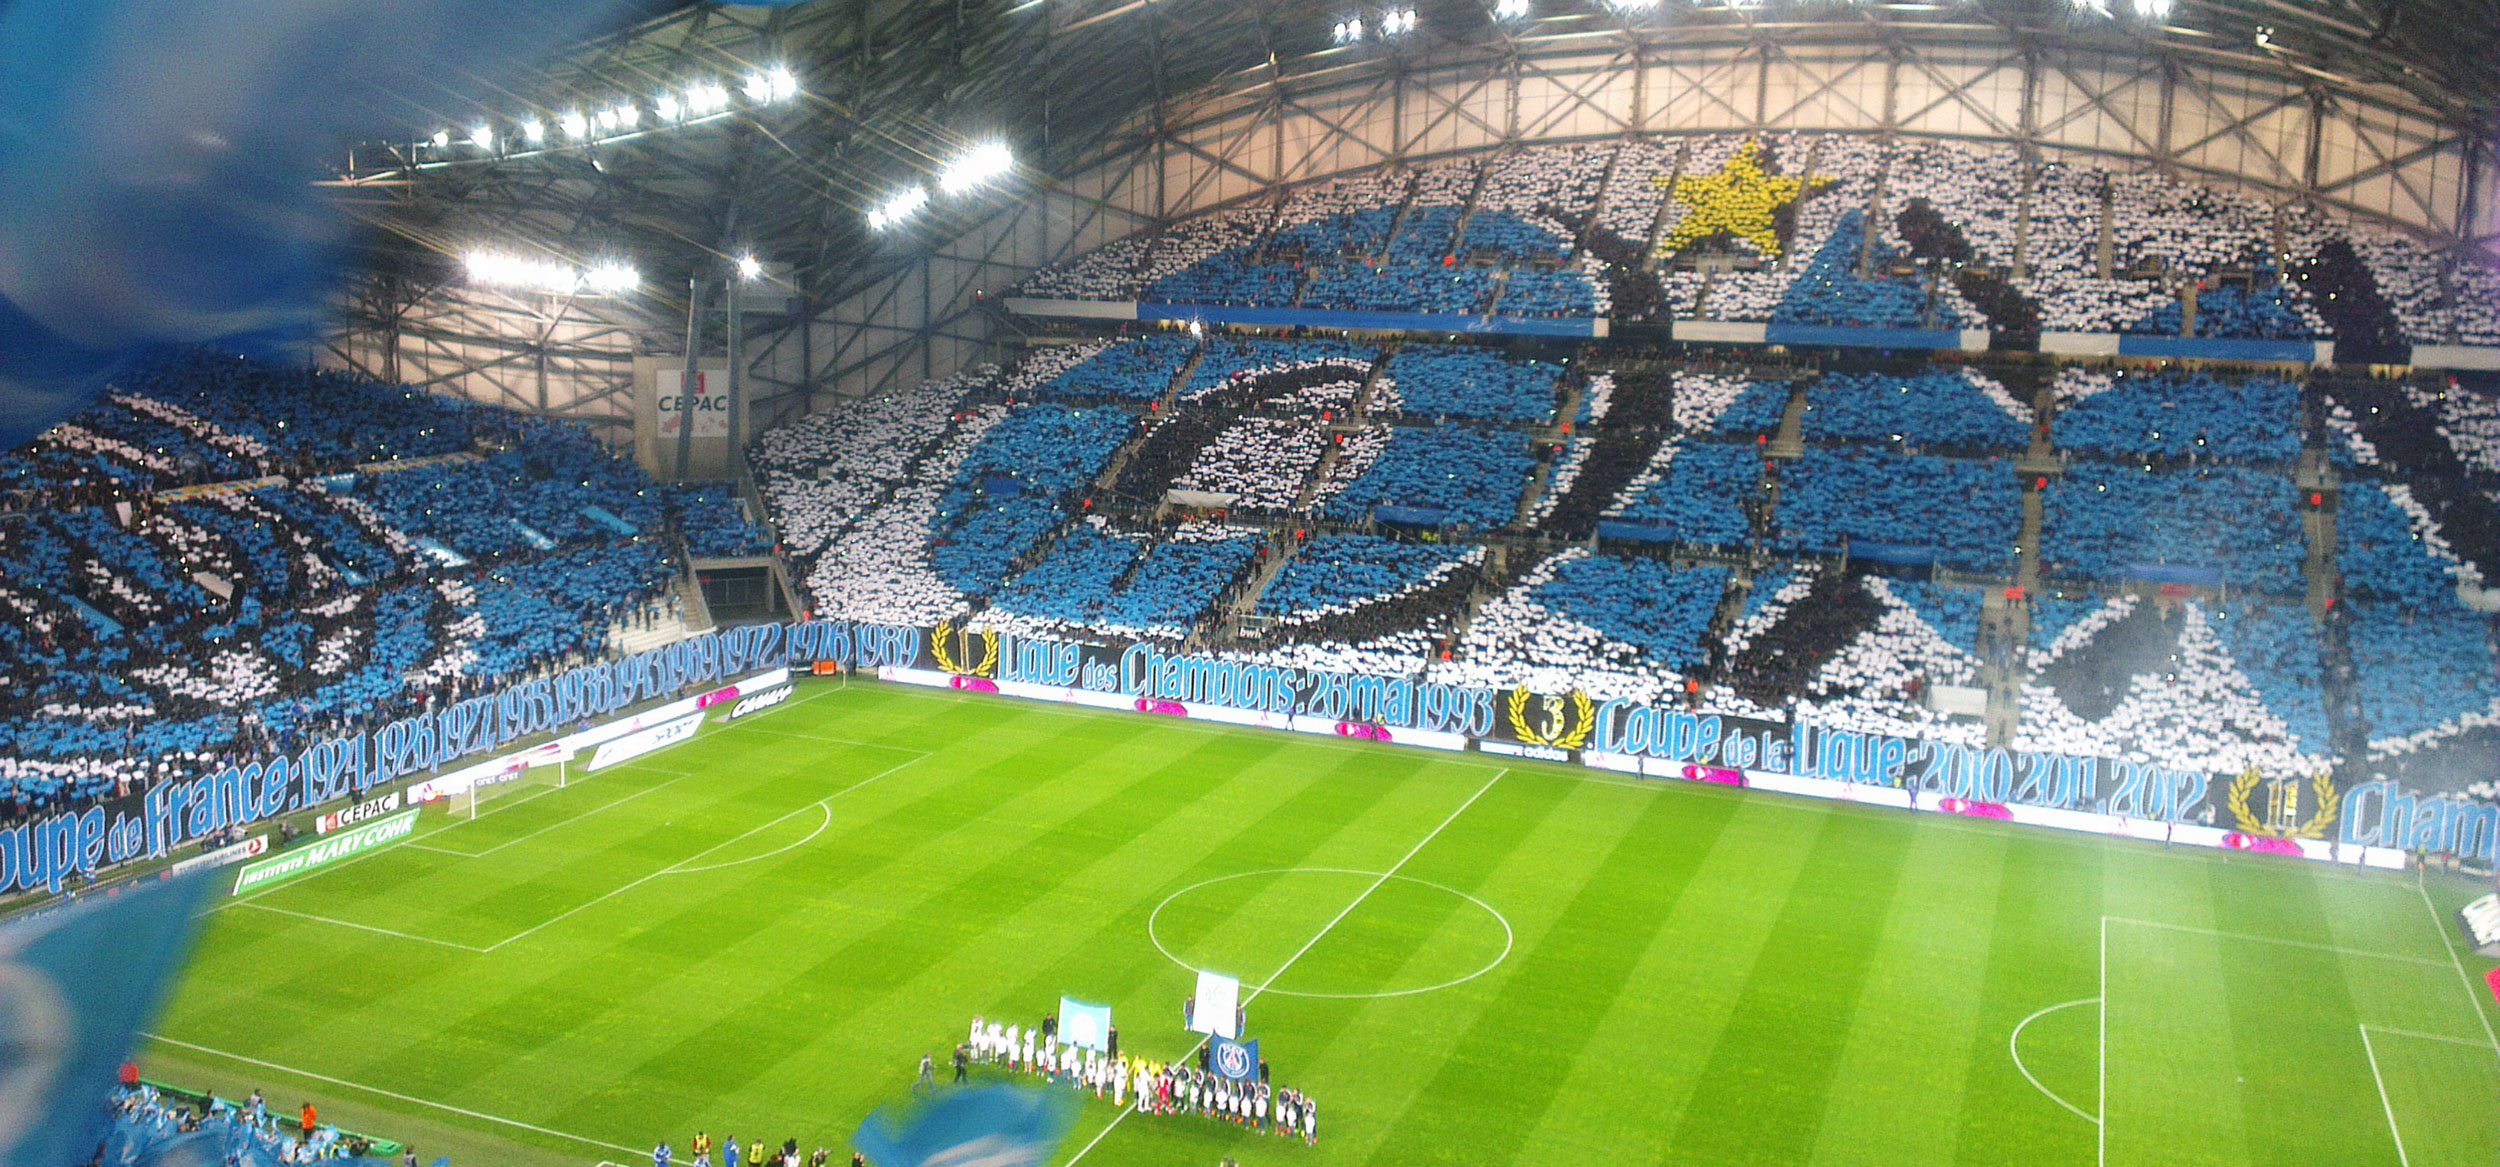 Stade Vélodrome, Marseille, France